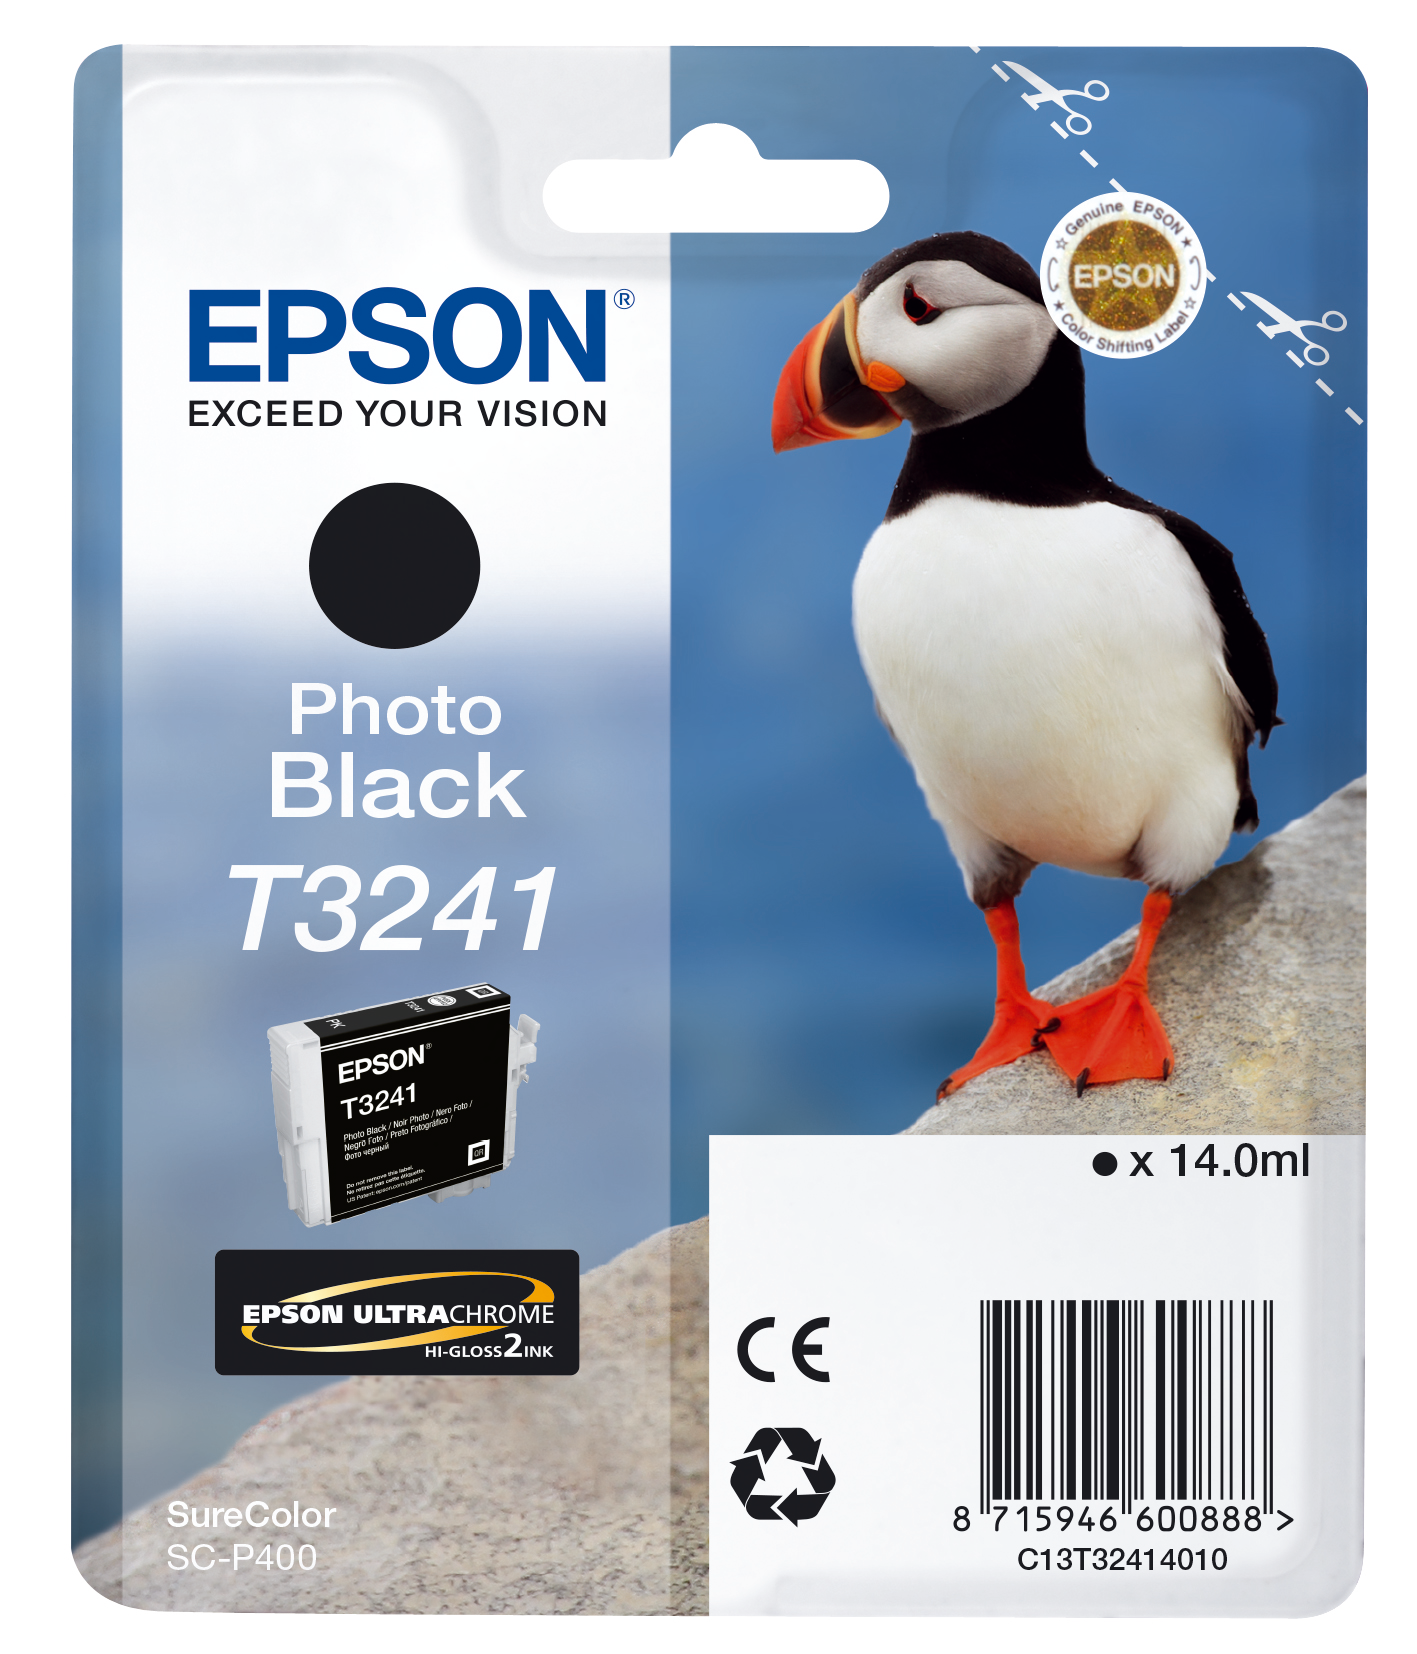 Epson T3241 Photo Black single pack / foto zwart